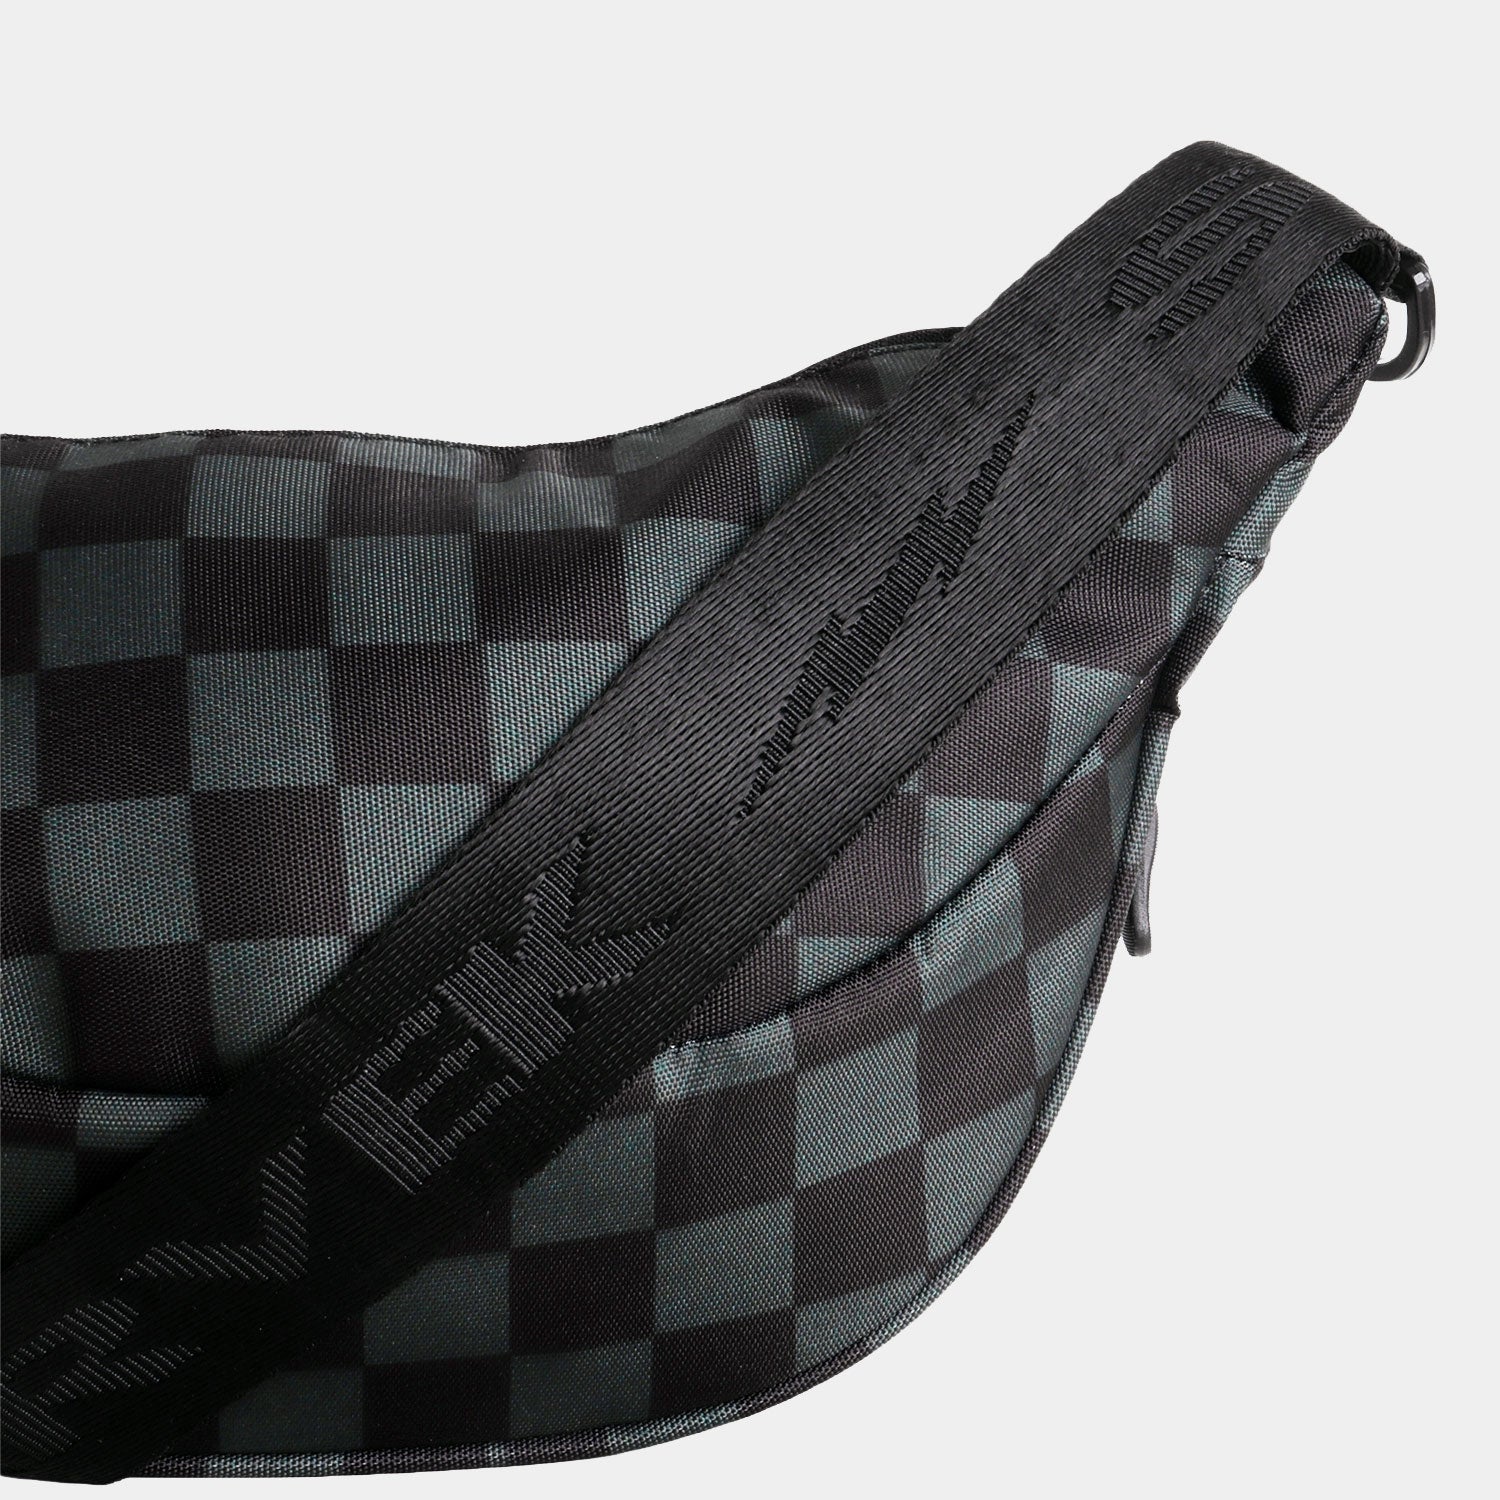 Supervek Crossbody Slinger - Check Noise - Urban Functional Fanny Hip Bag for Everyday Essentials - Belt Design